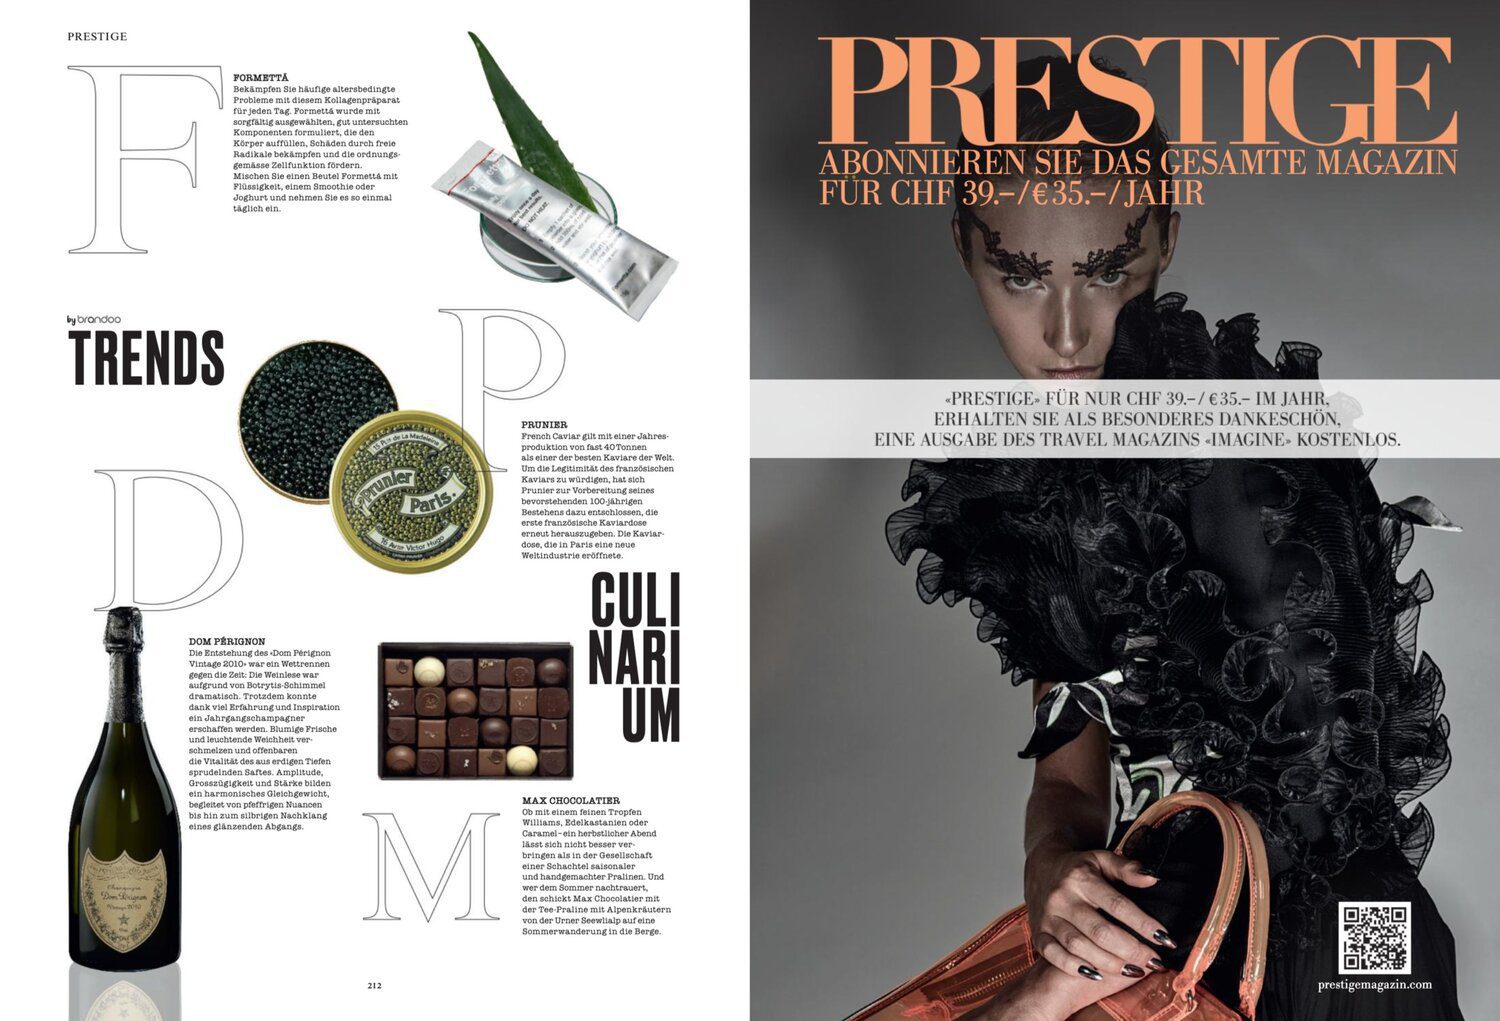 Formetta - Press - Prestige magazine